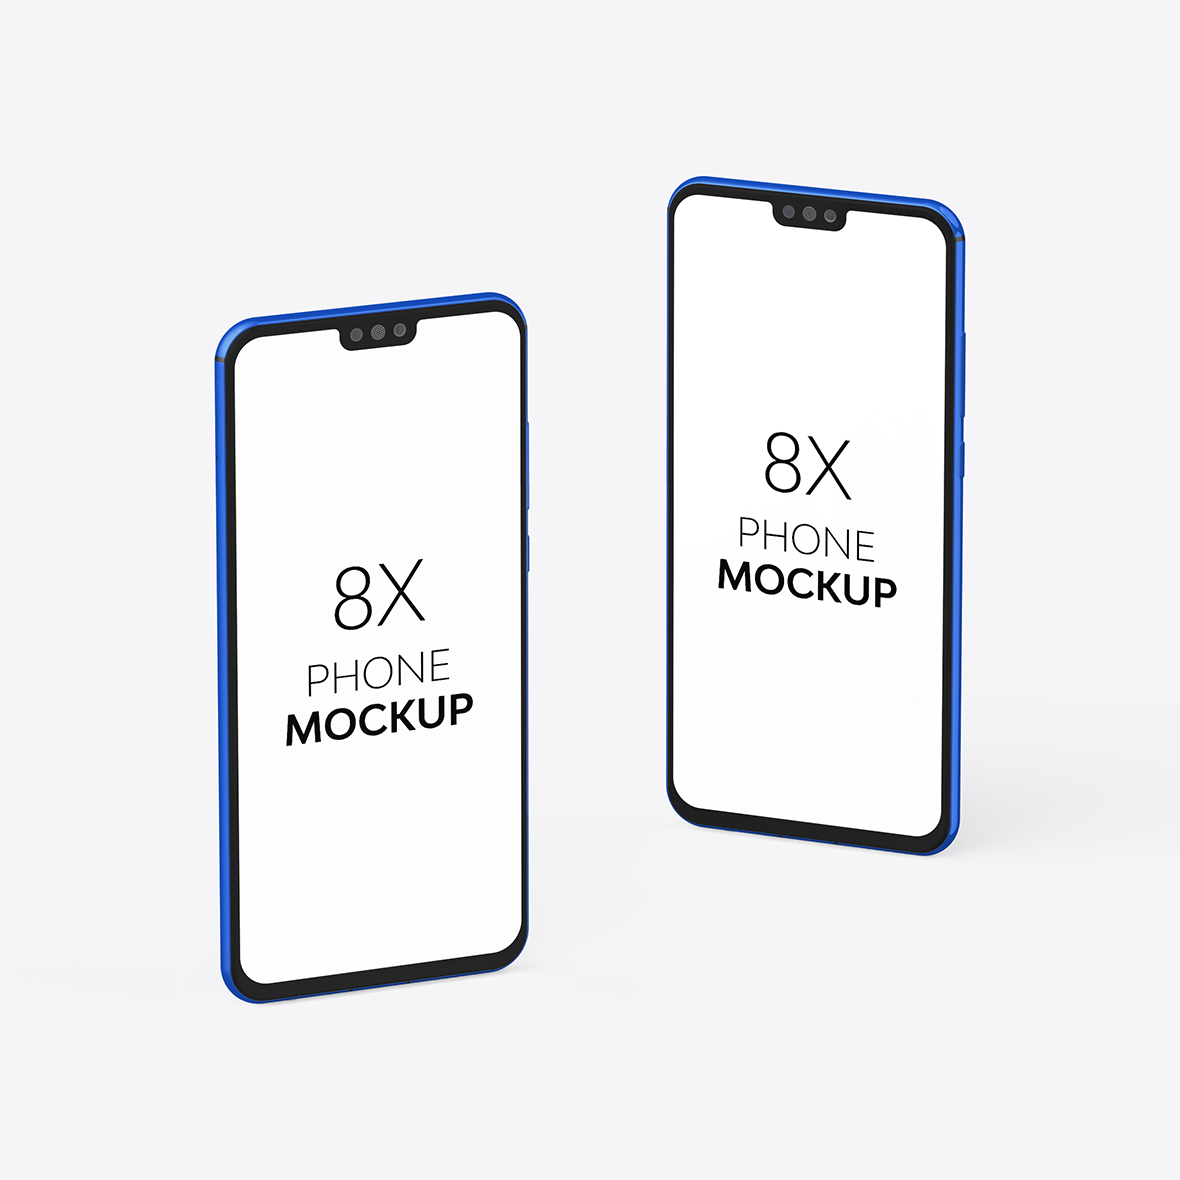 8X Phone Mockup